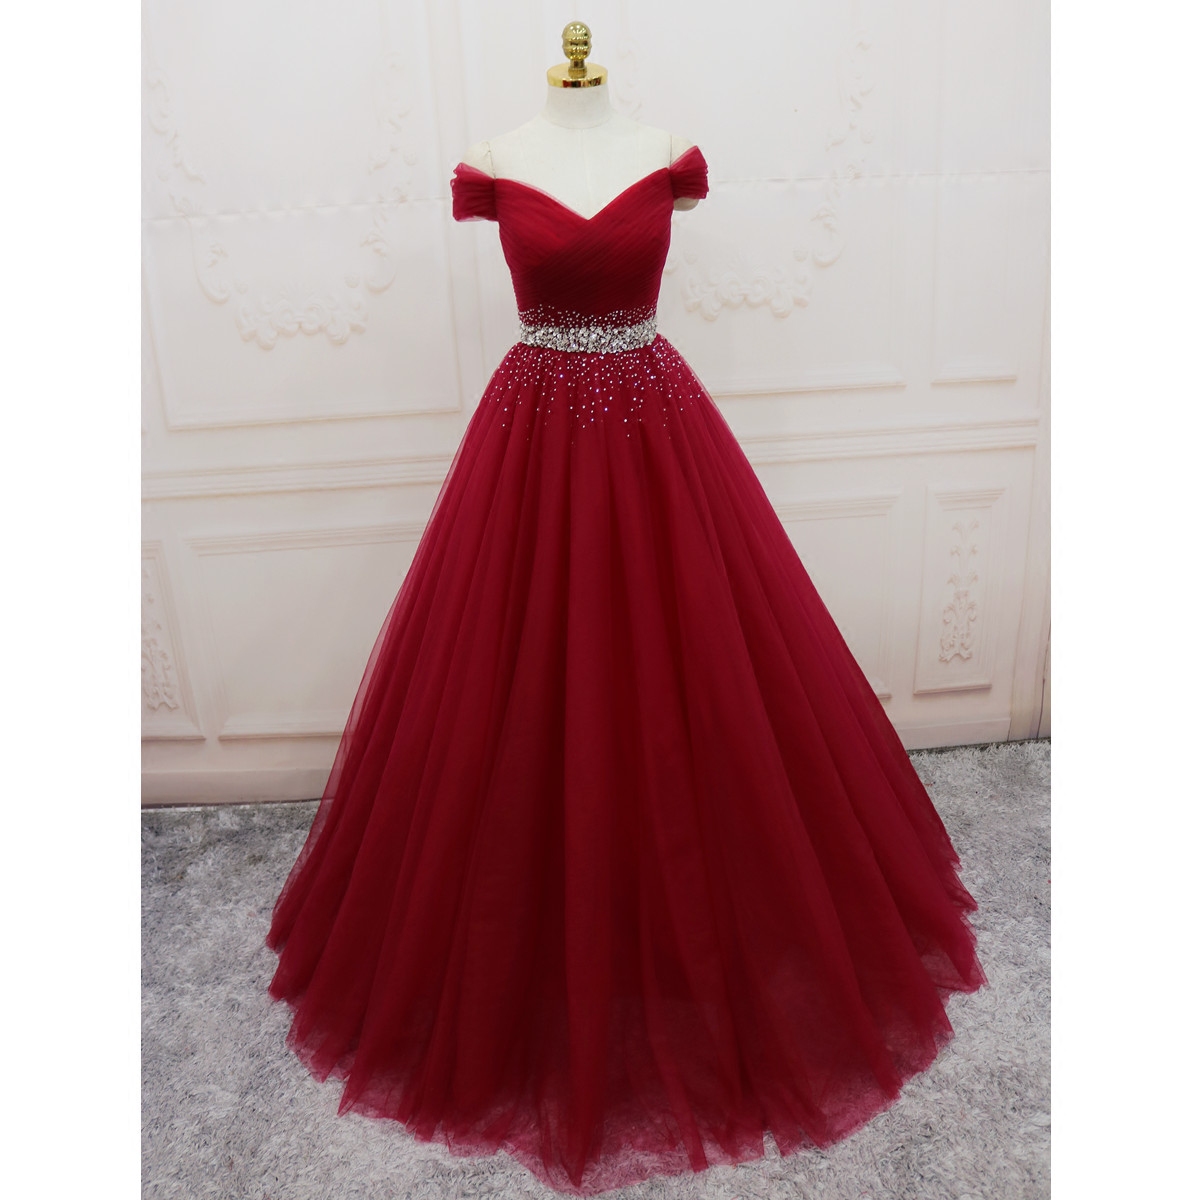 Burgundy Quinceanera Dress 2019 Cap Sleeve Ball Gowns Vestidos De 15 Debutante Gowns Prom Dresses Evening Gowns